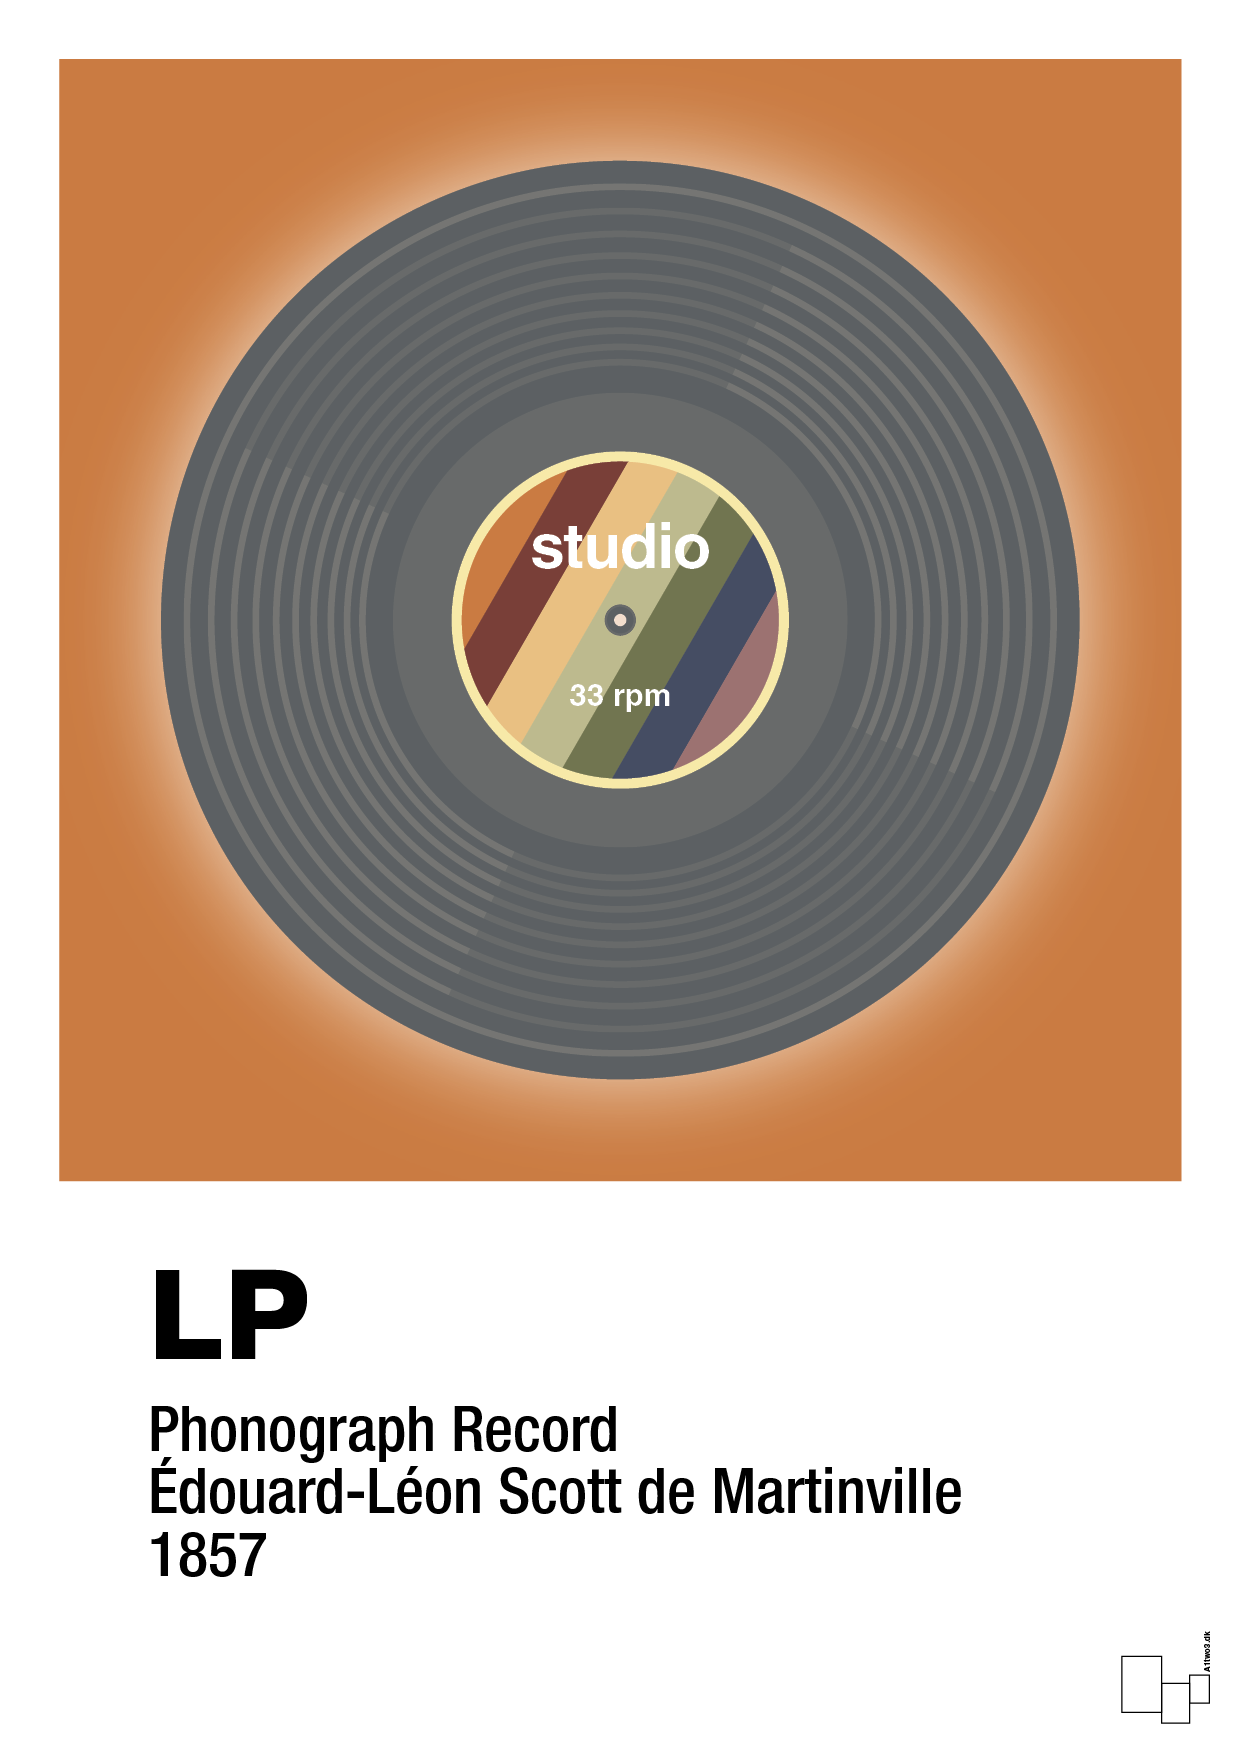 vinylplade 33rpm - Plakat med Grafik i Rumba Orange